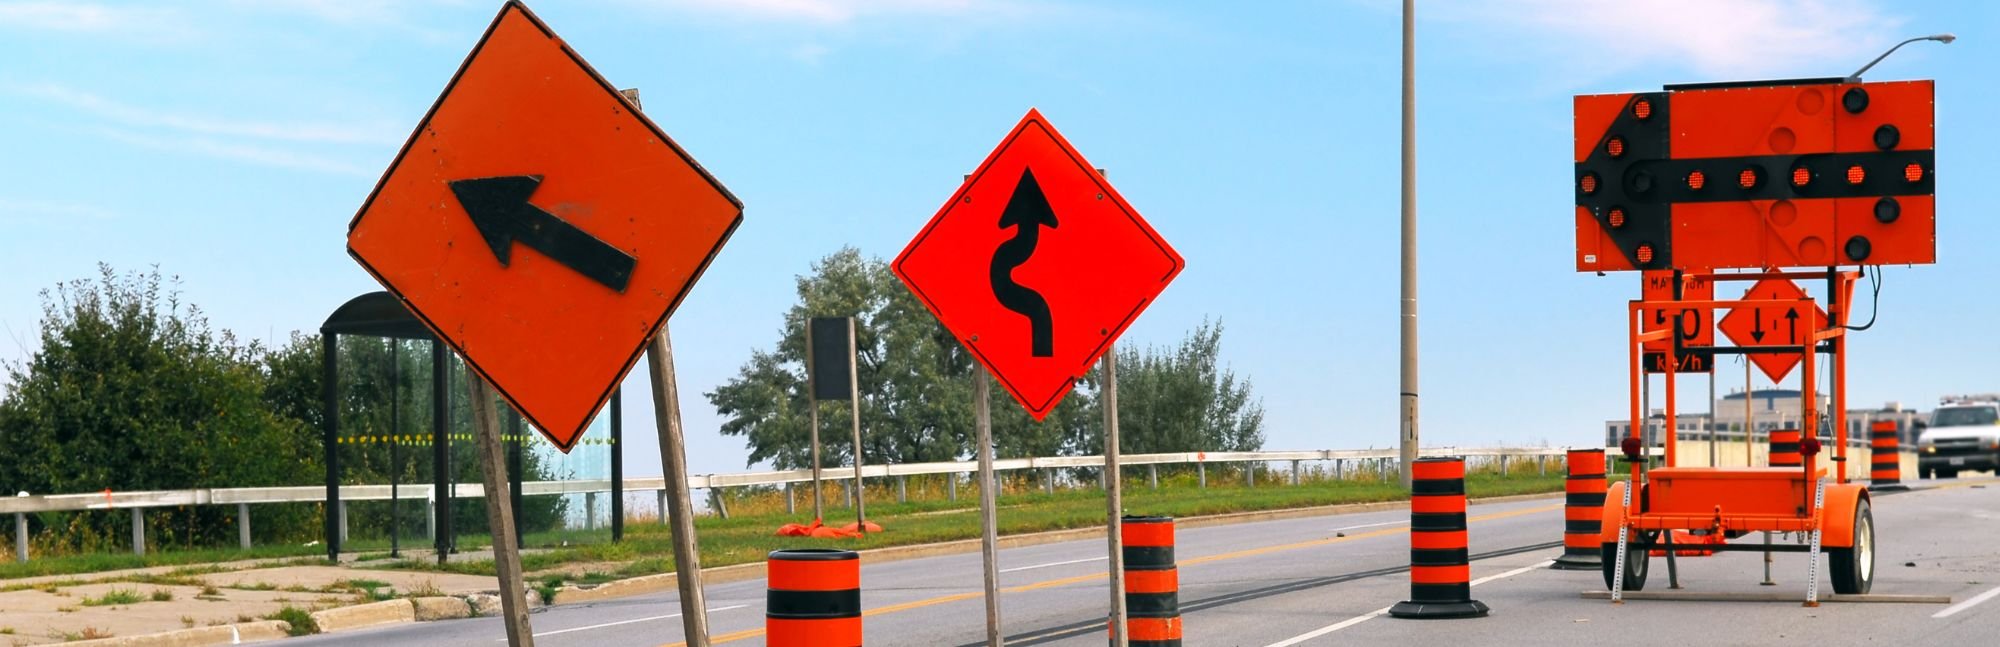 highway construction in trucking traffic dangers hazards